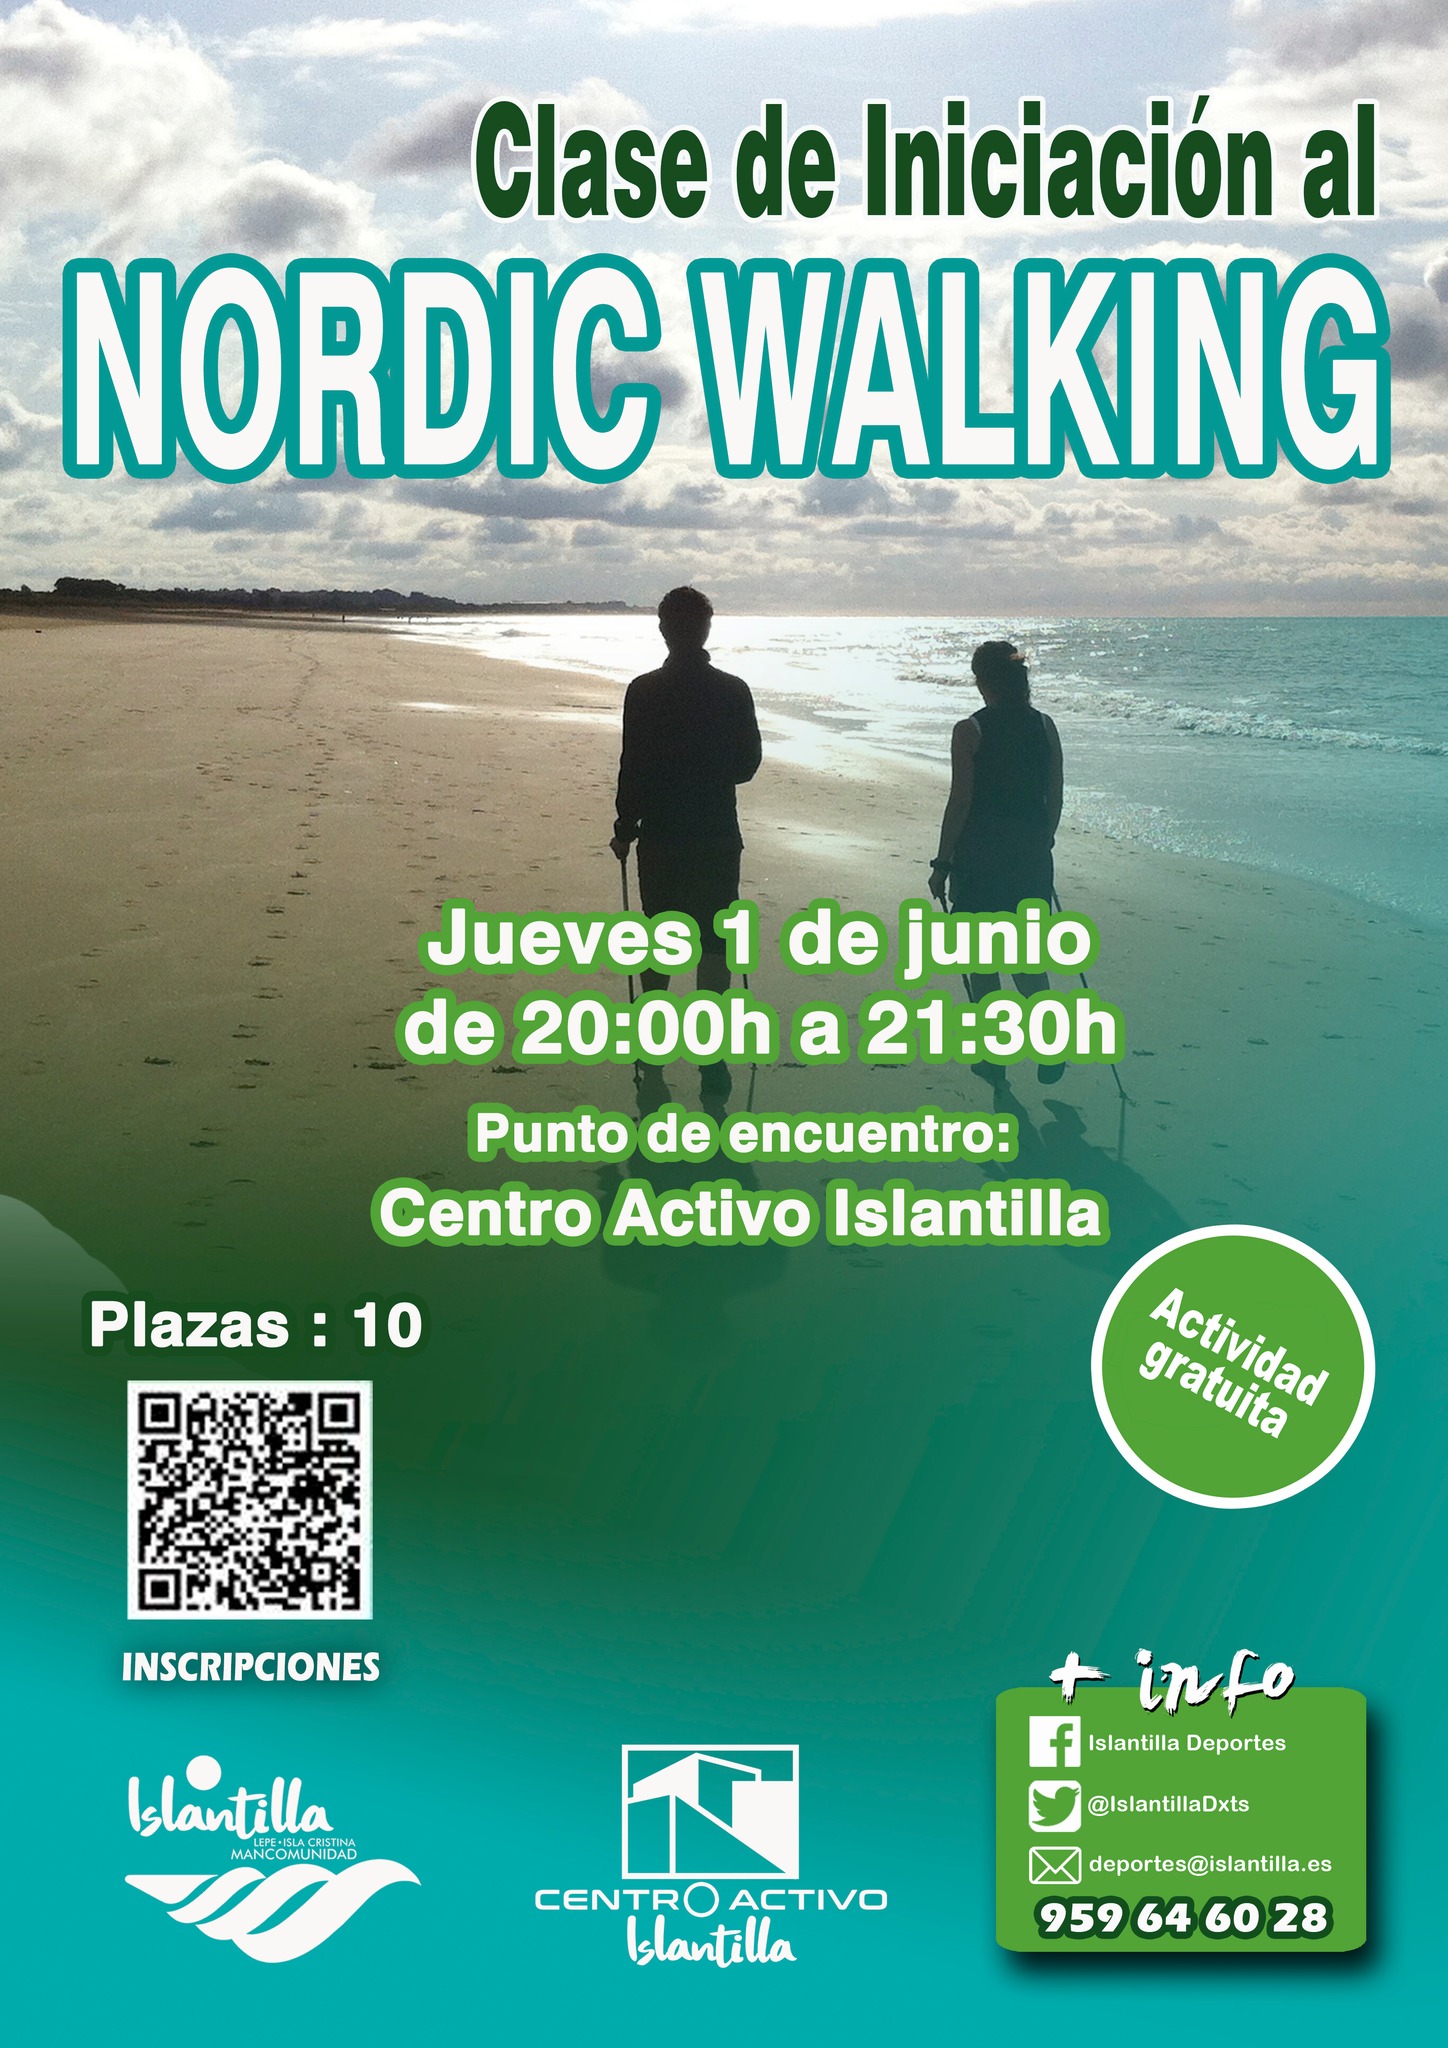 NORDIC WALKING / MARCHA NÓRDICA